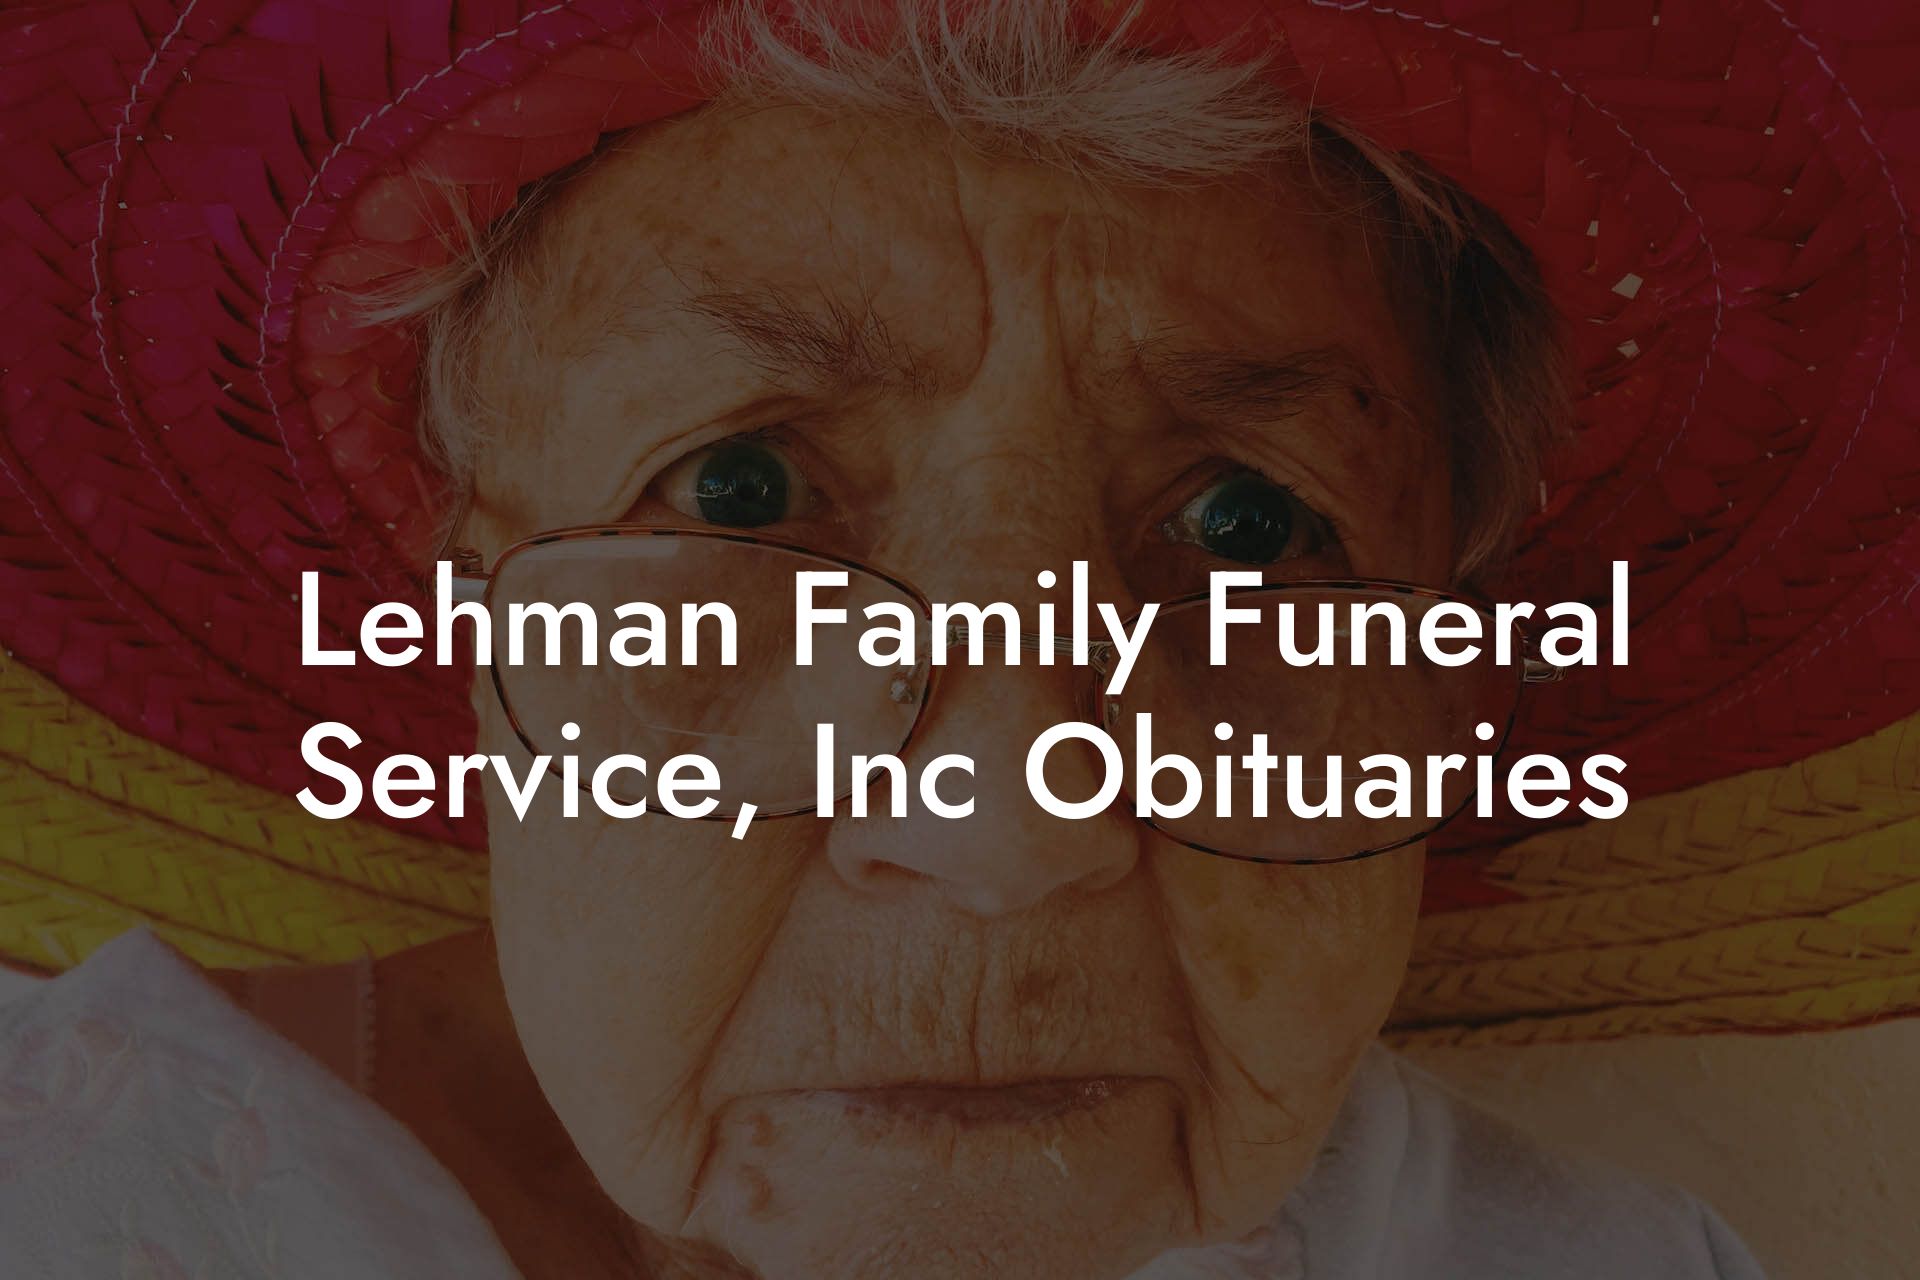 Lehman Family Funeral Service, Inc Obituaries